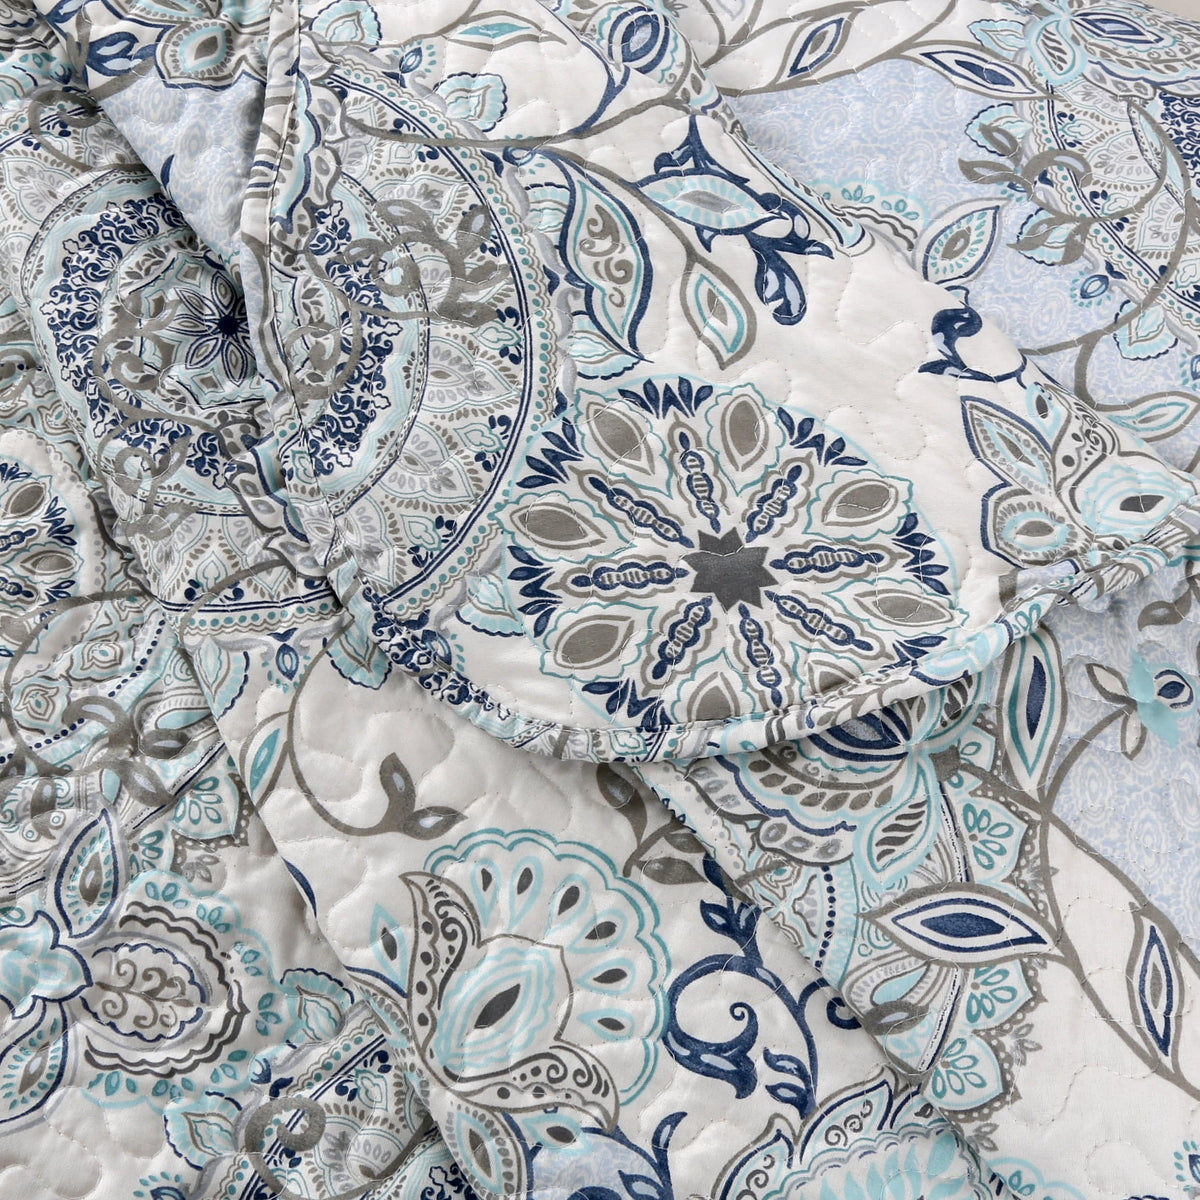 Rich Printed Stitching Coverlet Bedspread Ultra Soft, Summer Quilt Set, Blue Branch Damask Mandala Floral Pattern